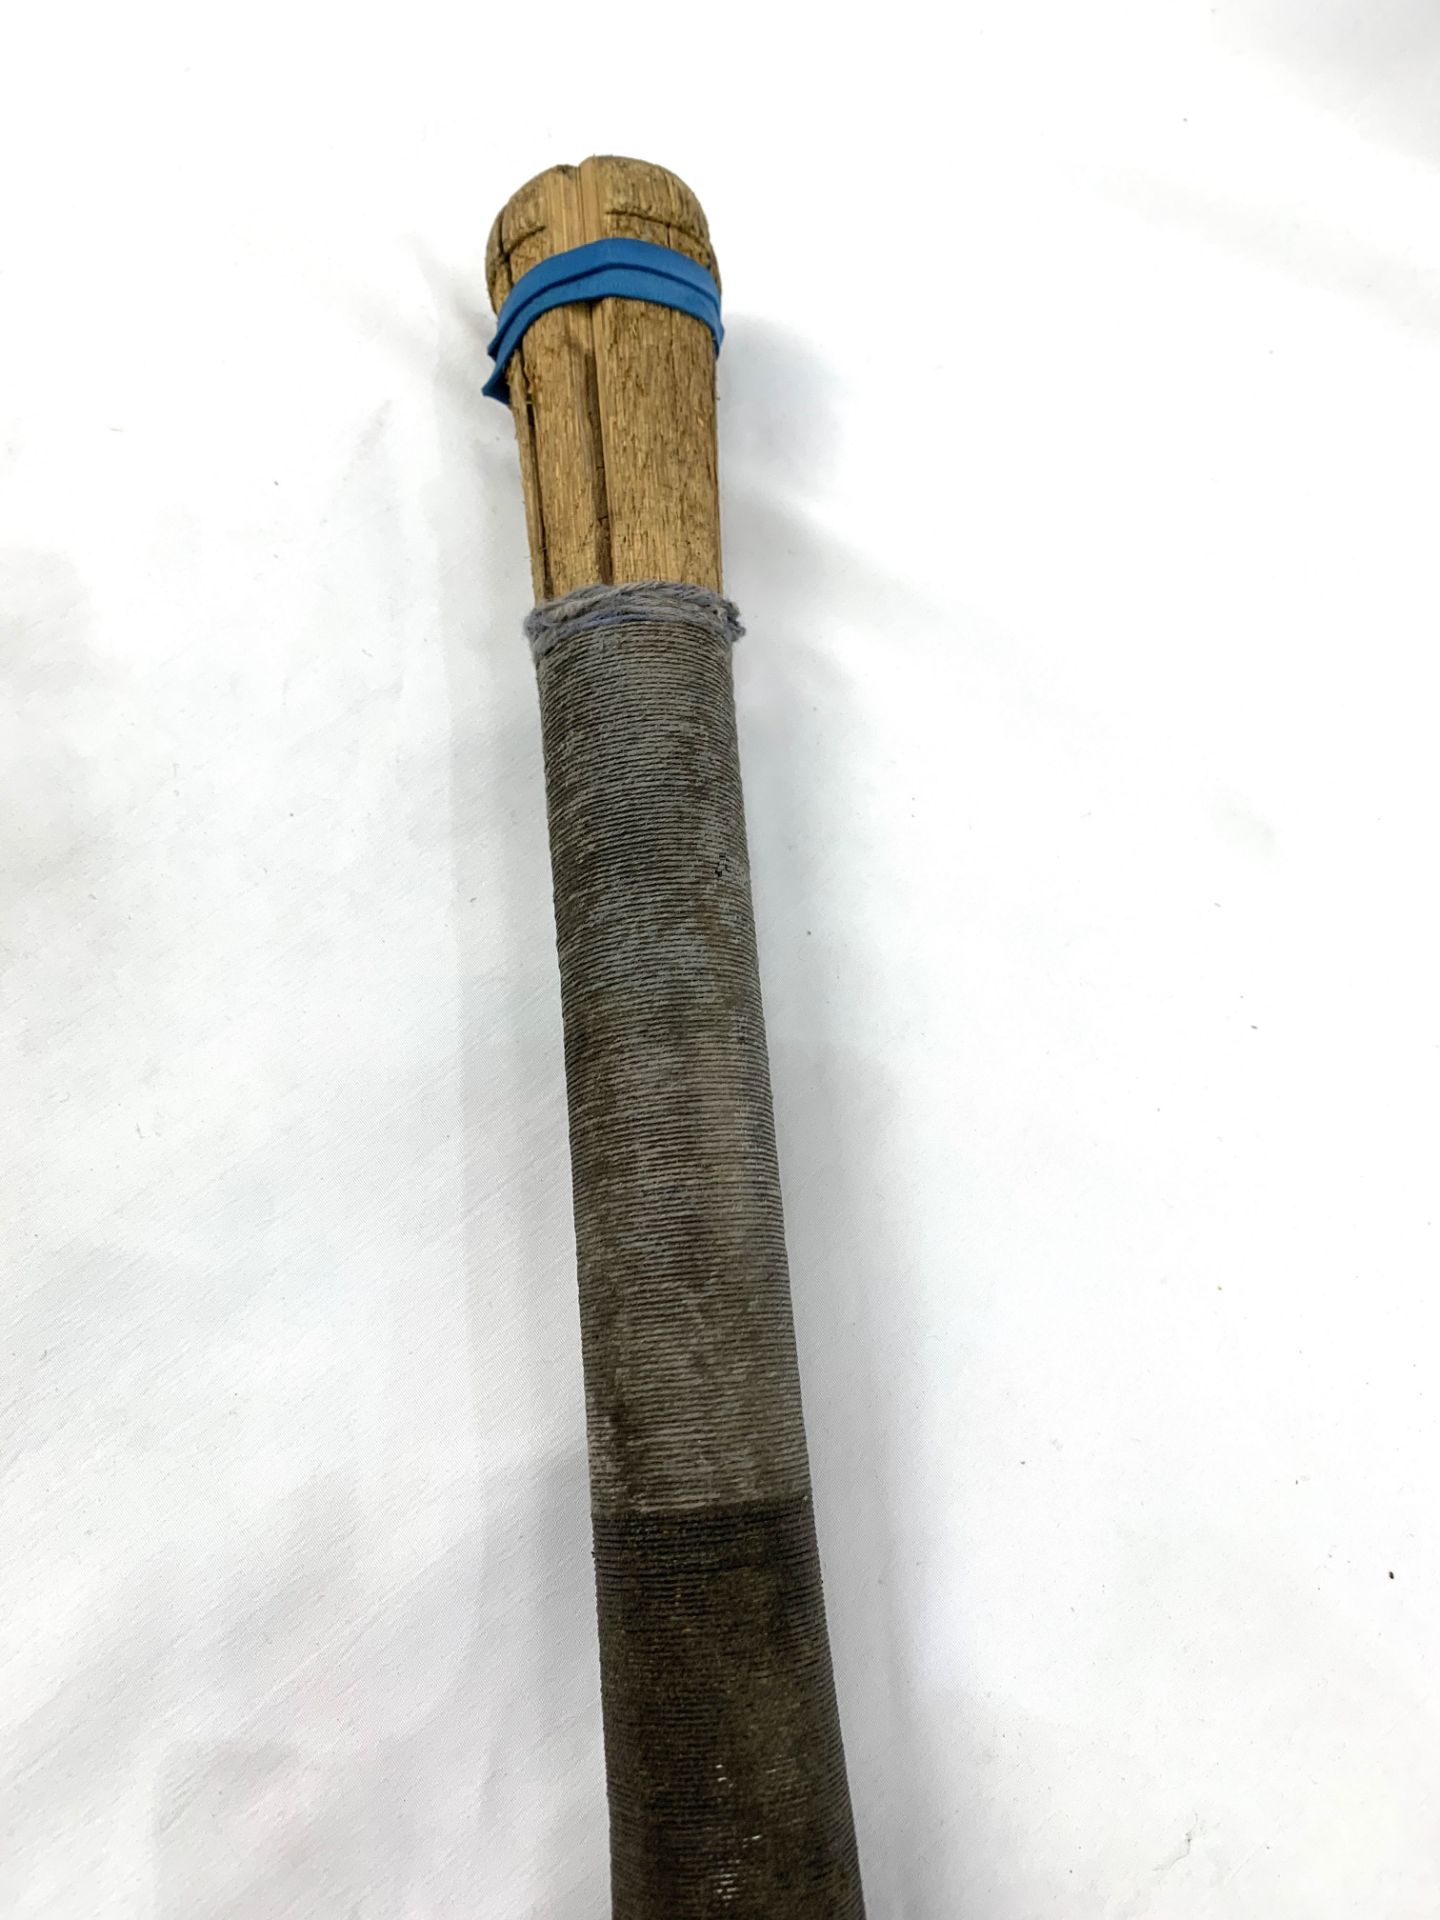 Slazenger 'Gradidge' cricket bat, and a set of rosewood bowls - Image 3 of 5